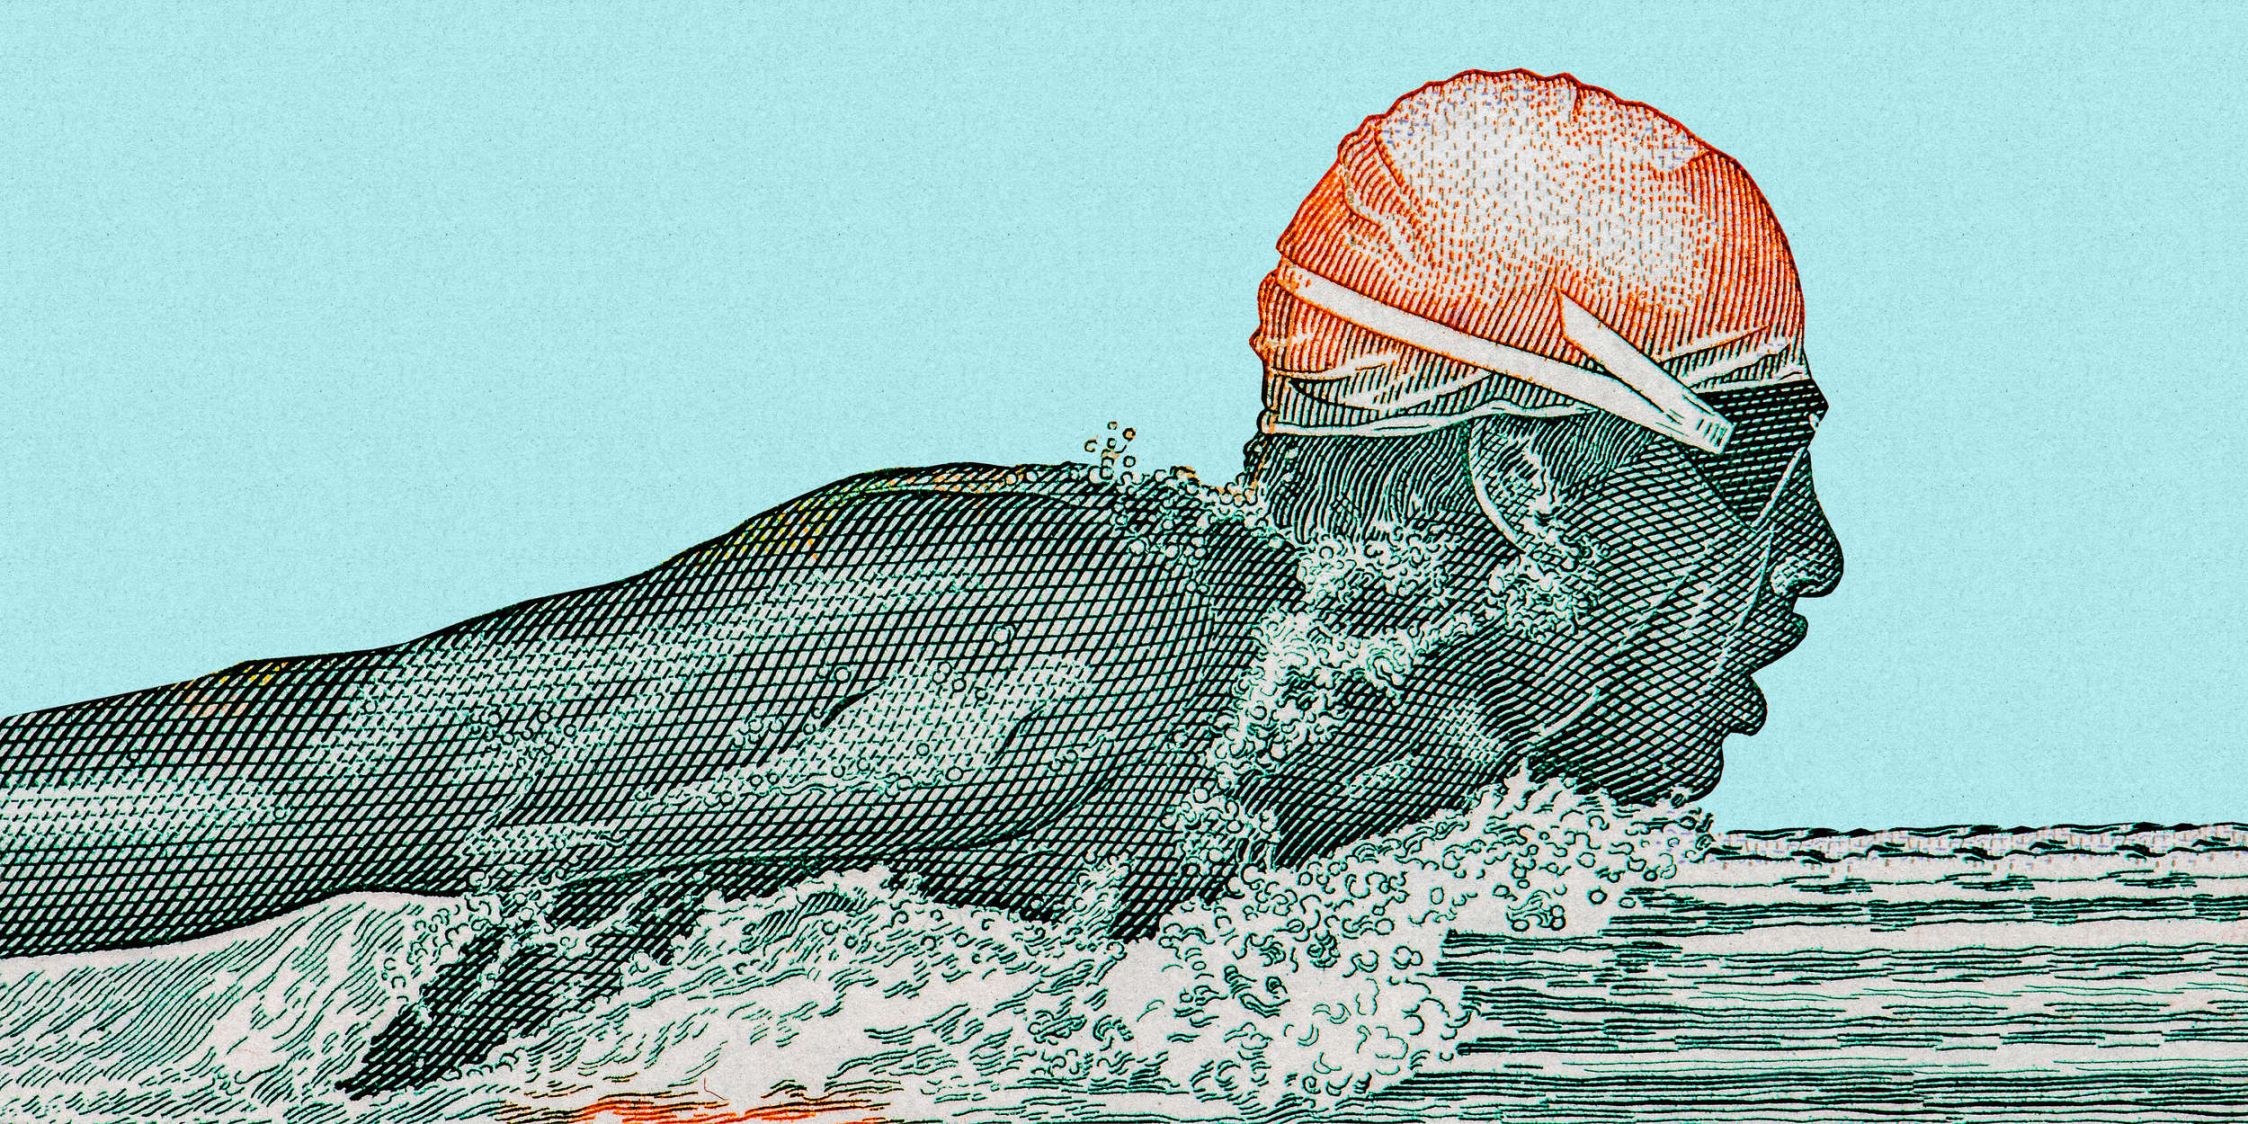             Fotomurali »aquaman« - nuotatore in pixel - benzina con texture carta kraft | tessuto non tessuto opaco e liscio
        